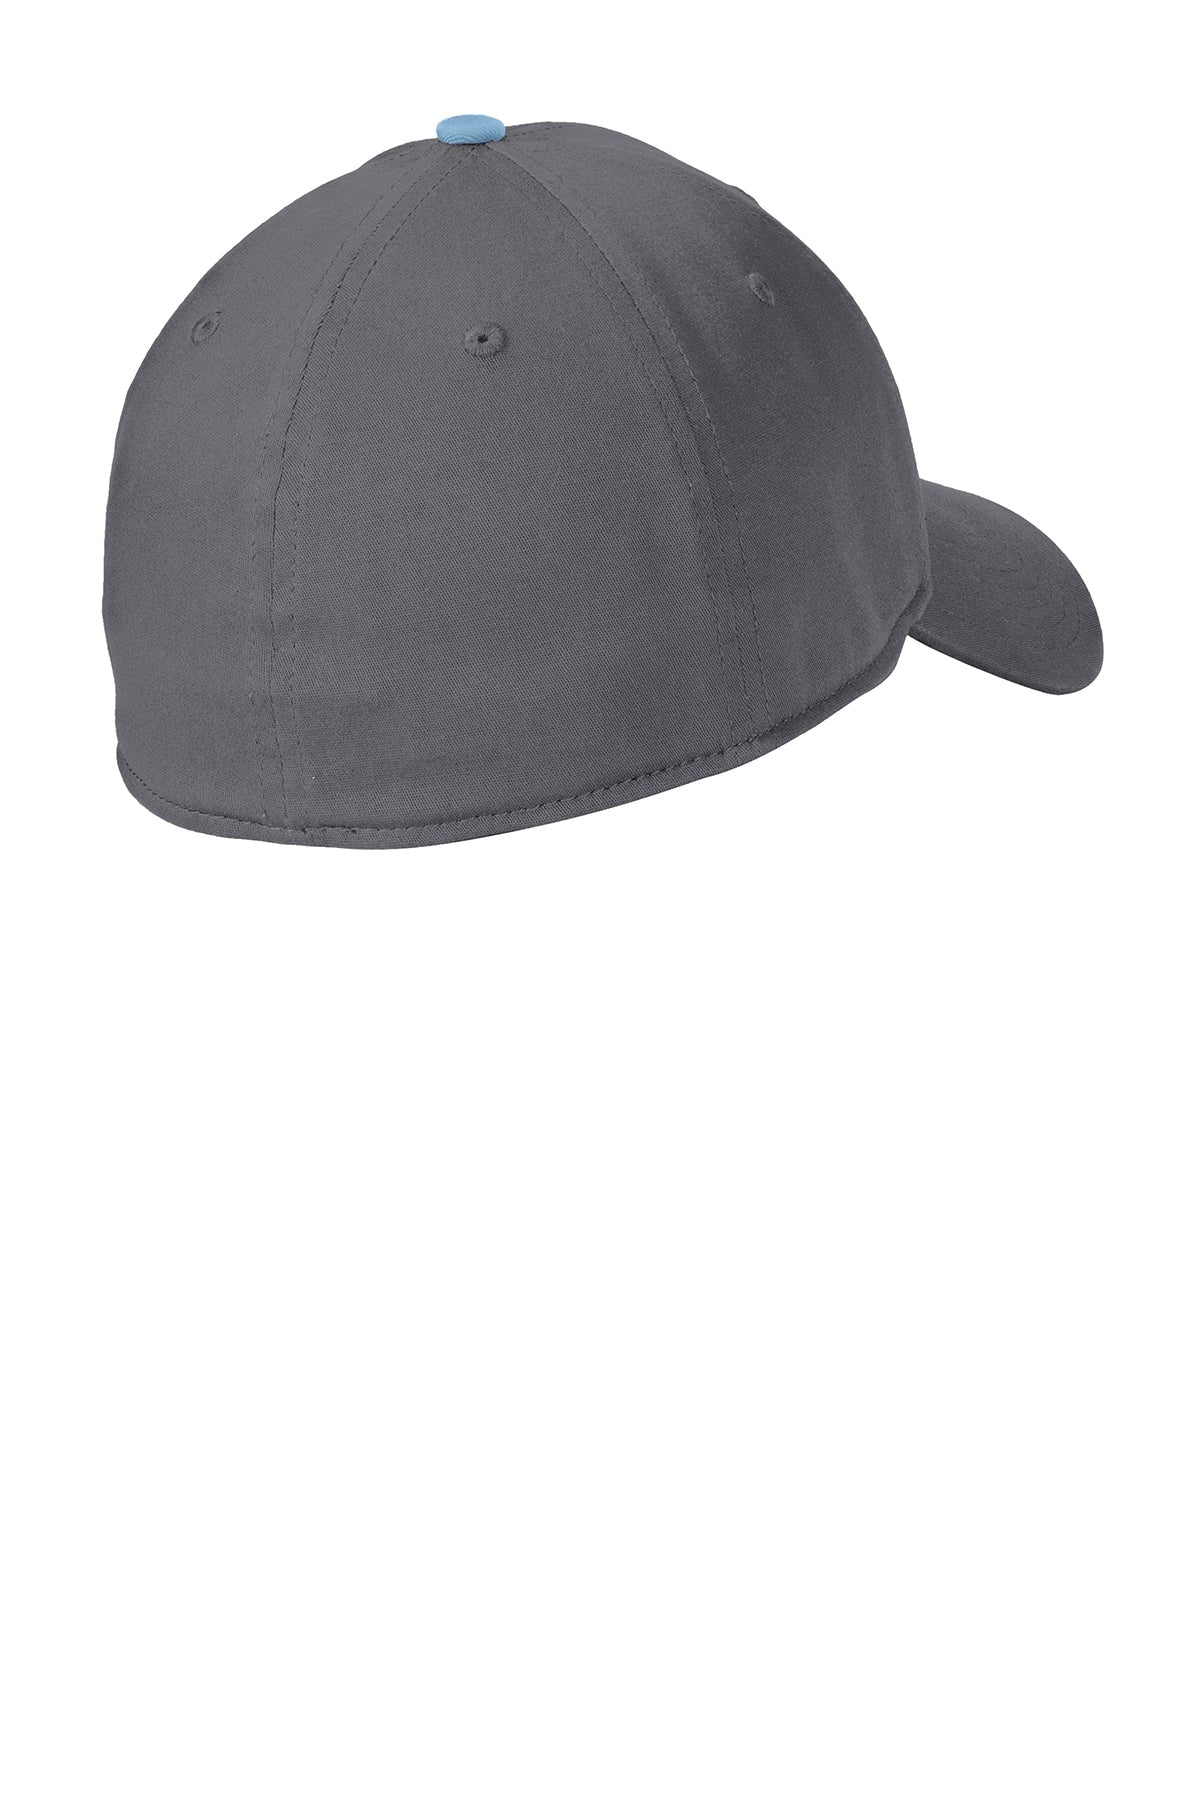 New Era Interception Branded Caps, Graphite/ Carolina Blue